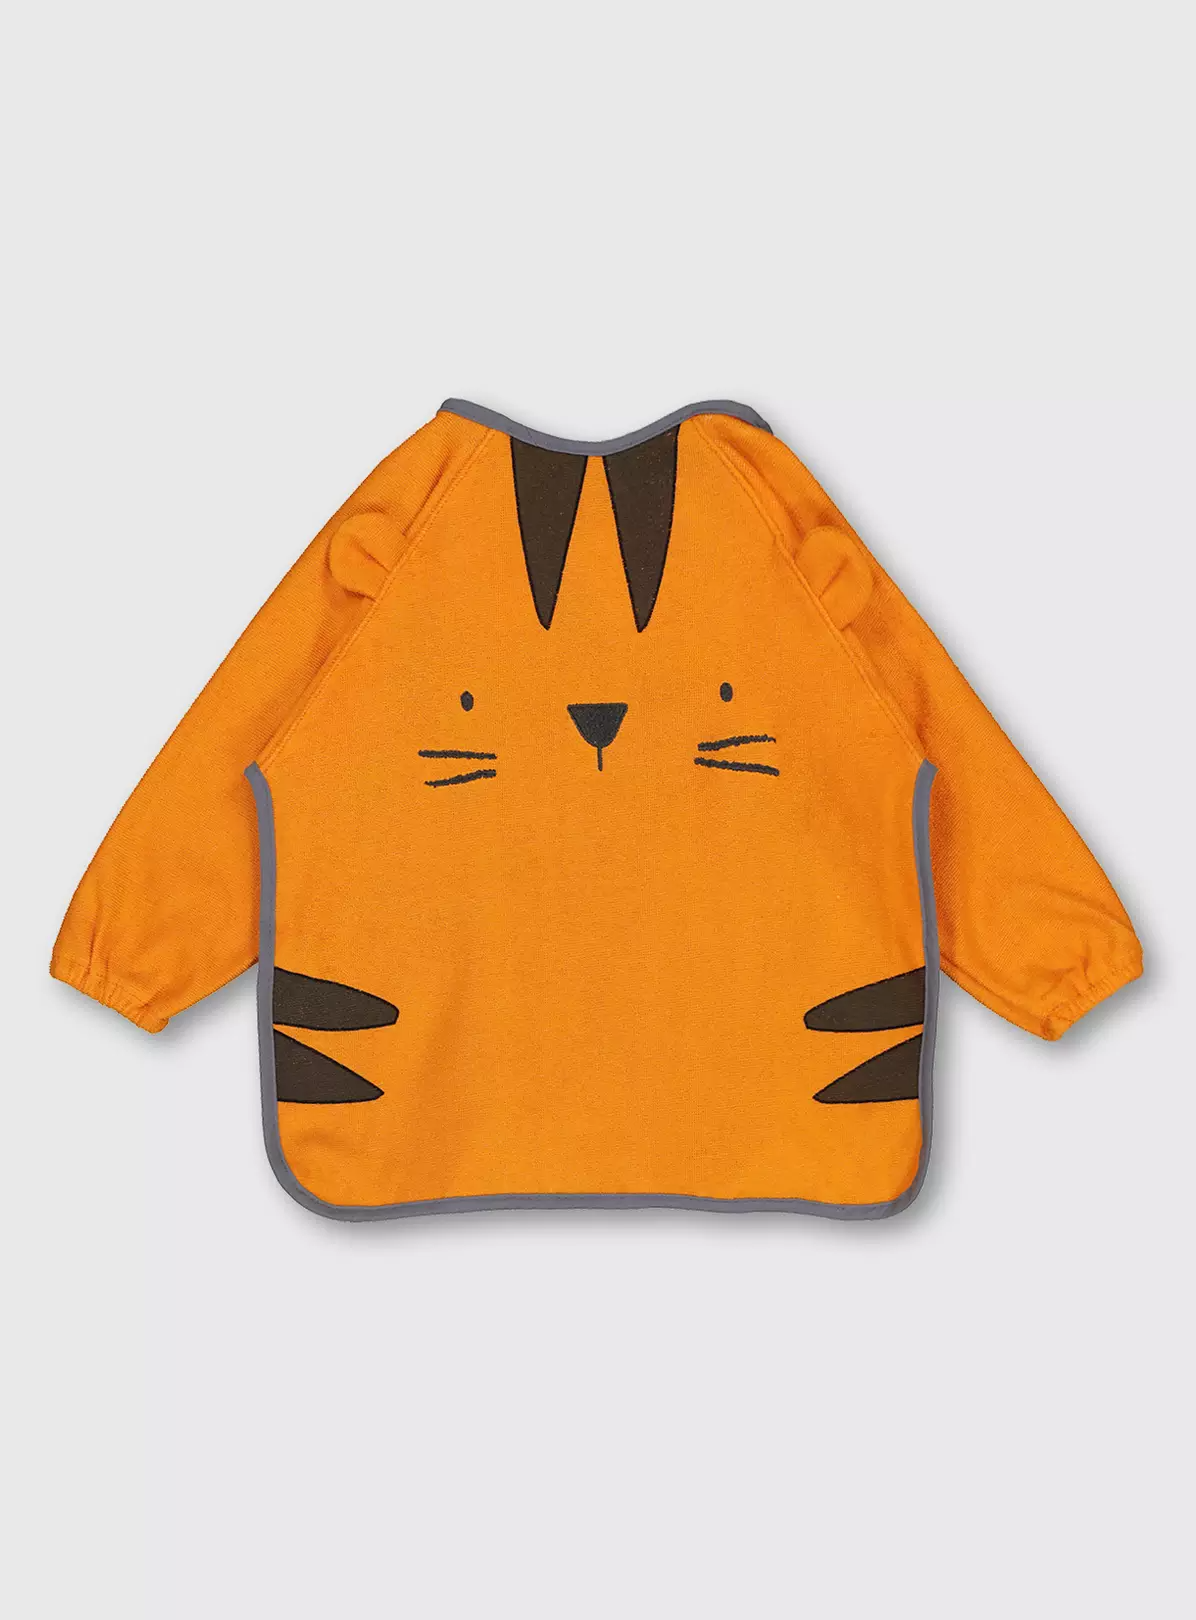 Orange Tiger Long Sleeve Bib – One Size